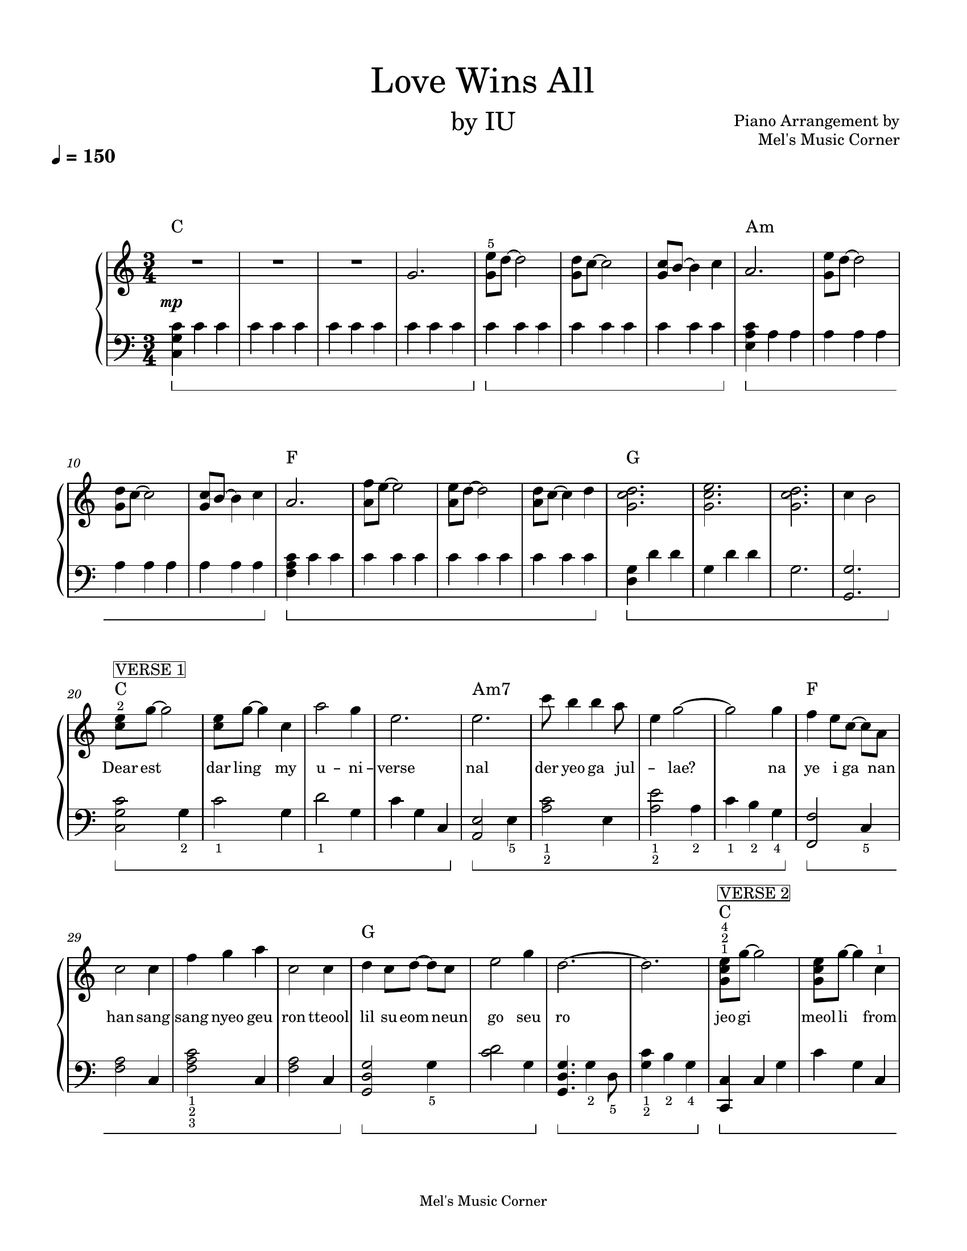 IU - Love Wins All (piano sheet music) by Mel's Music Corner